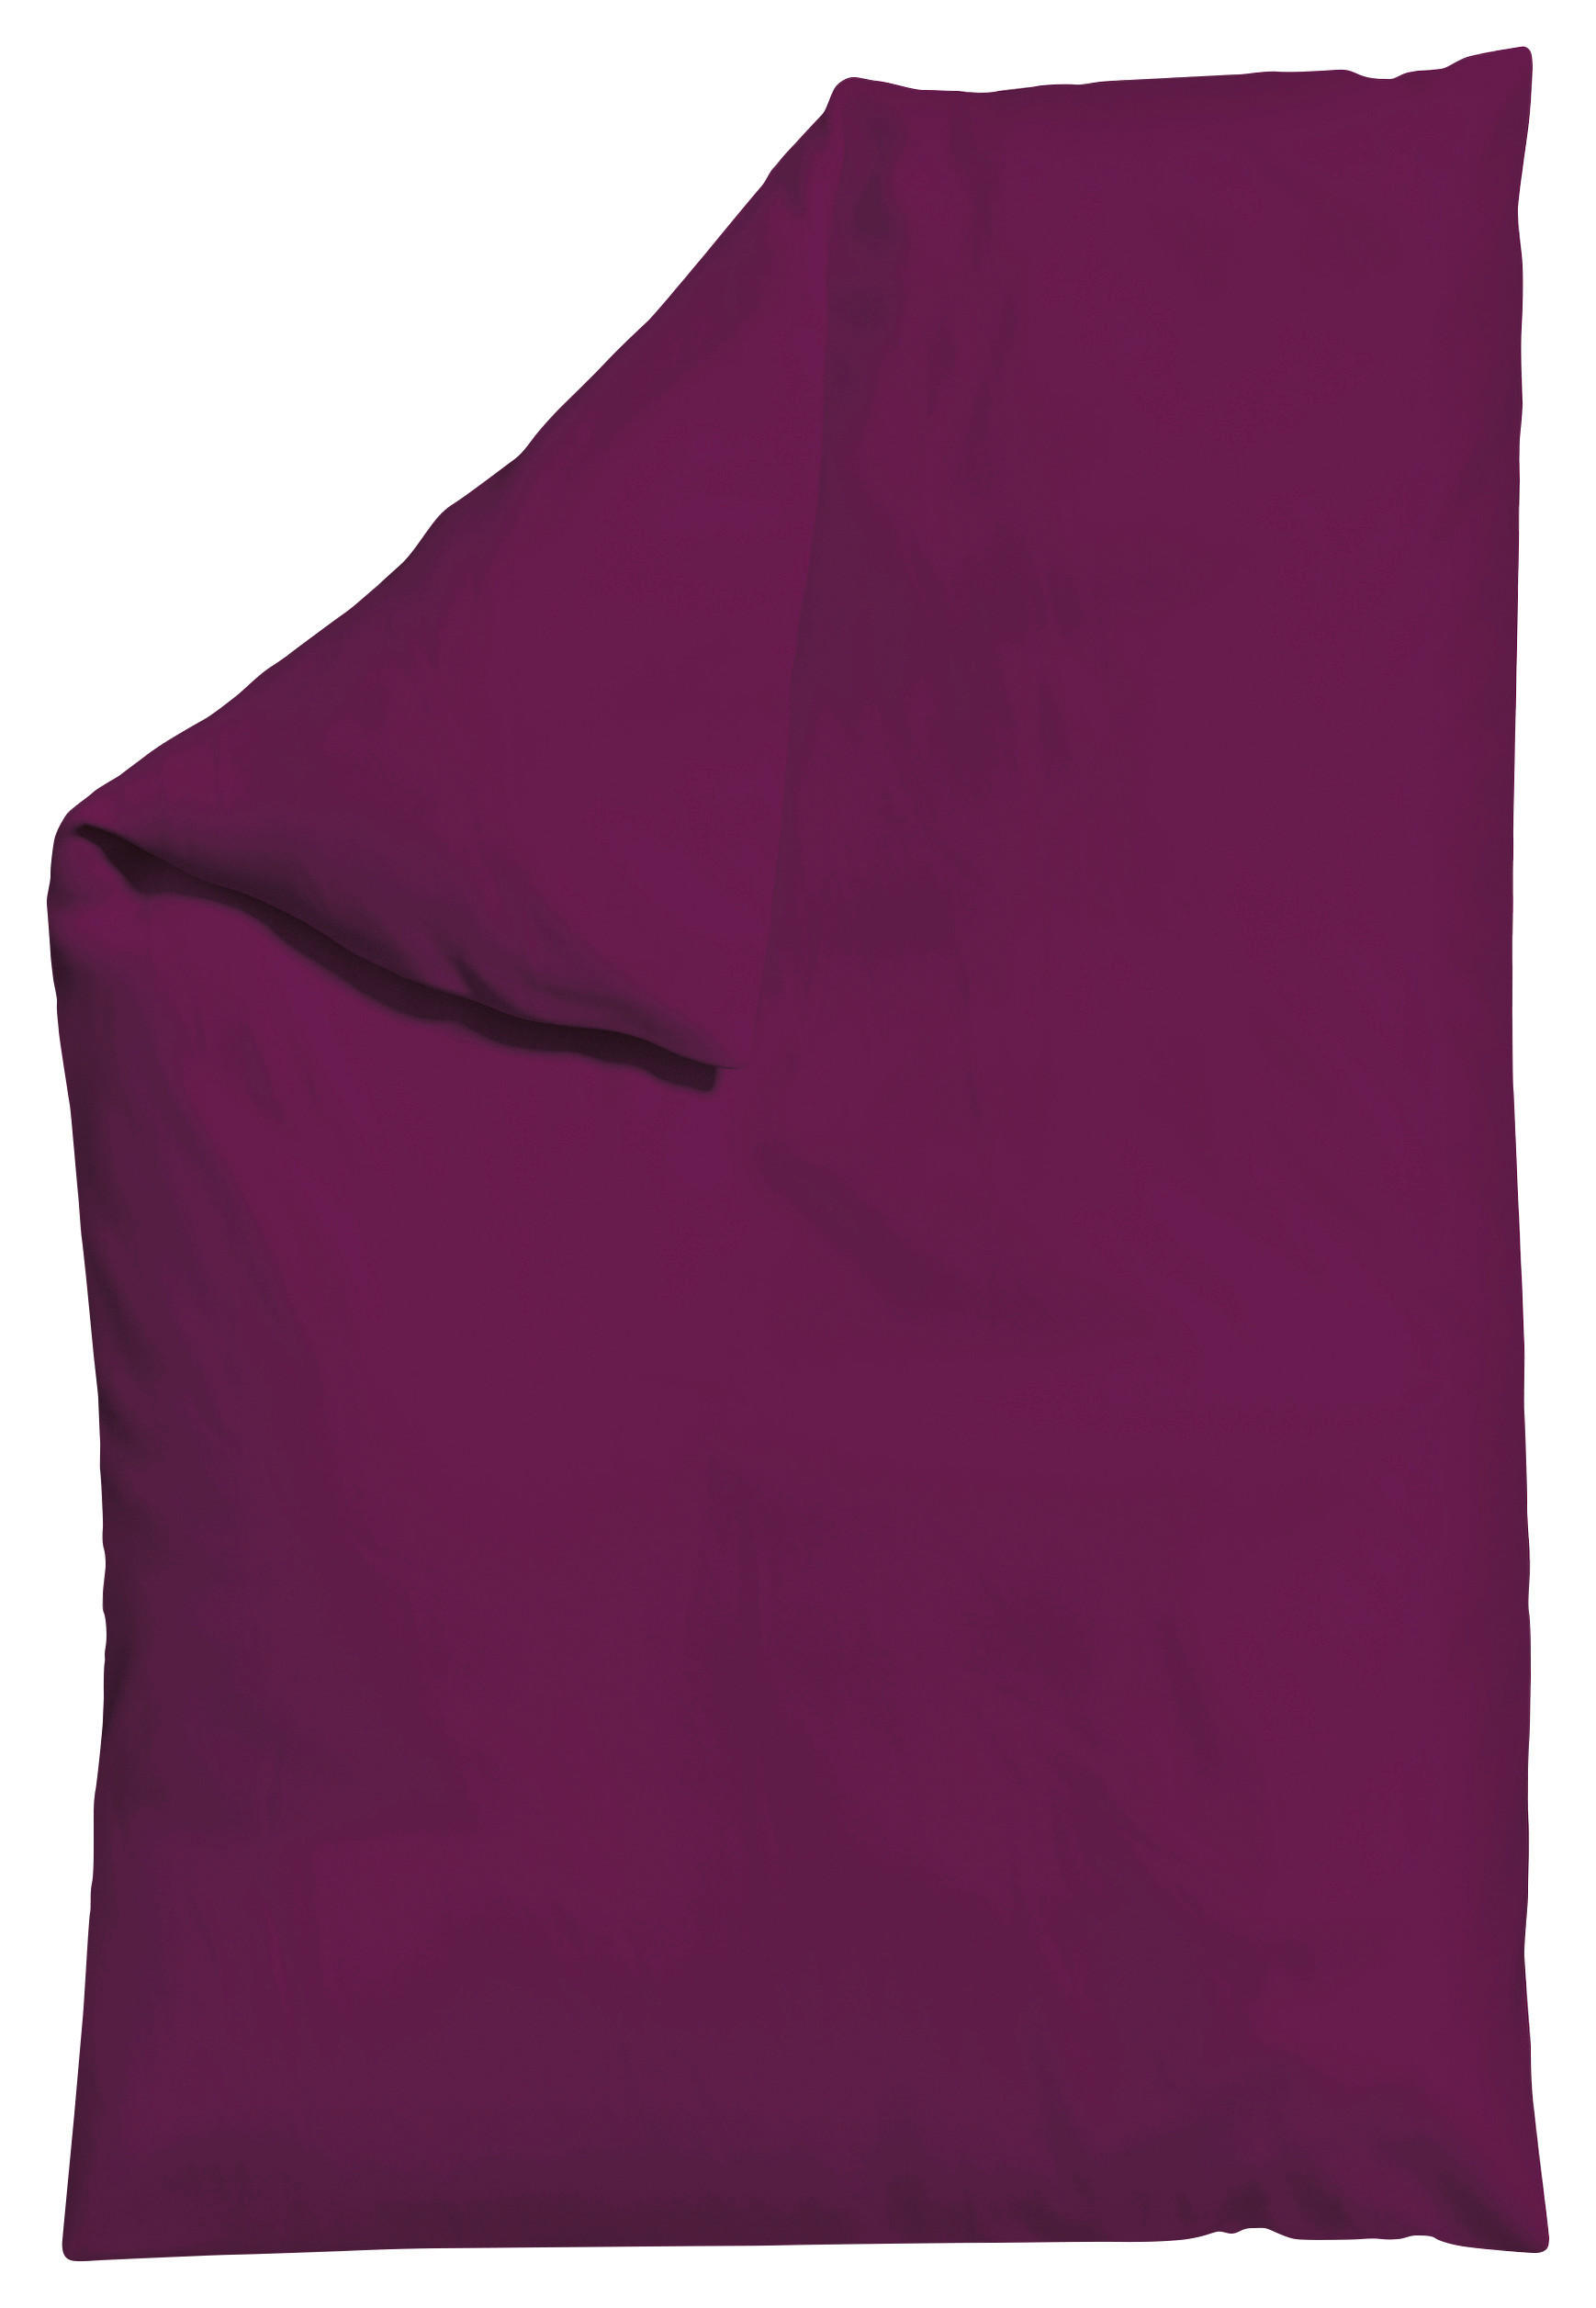 BETTDECKENBEZUG 135-140/200 cm  - Violett, Basics, Textil (135-140/200cm) - Schlafgut